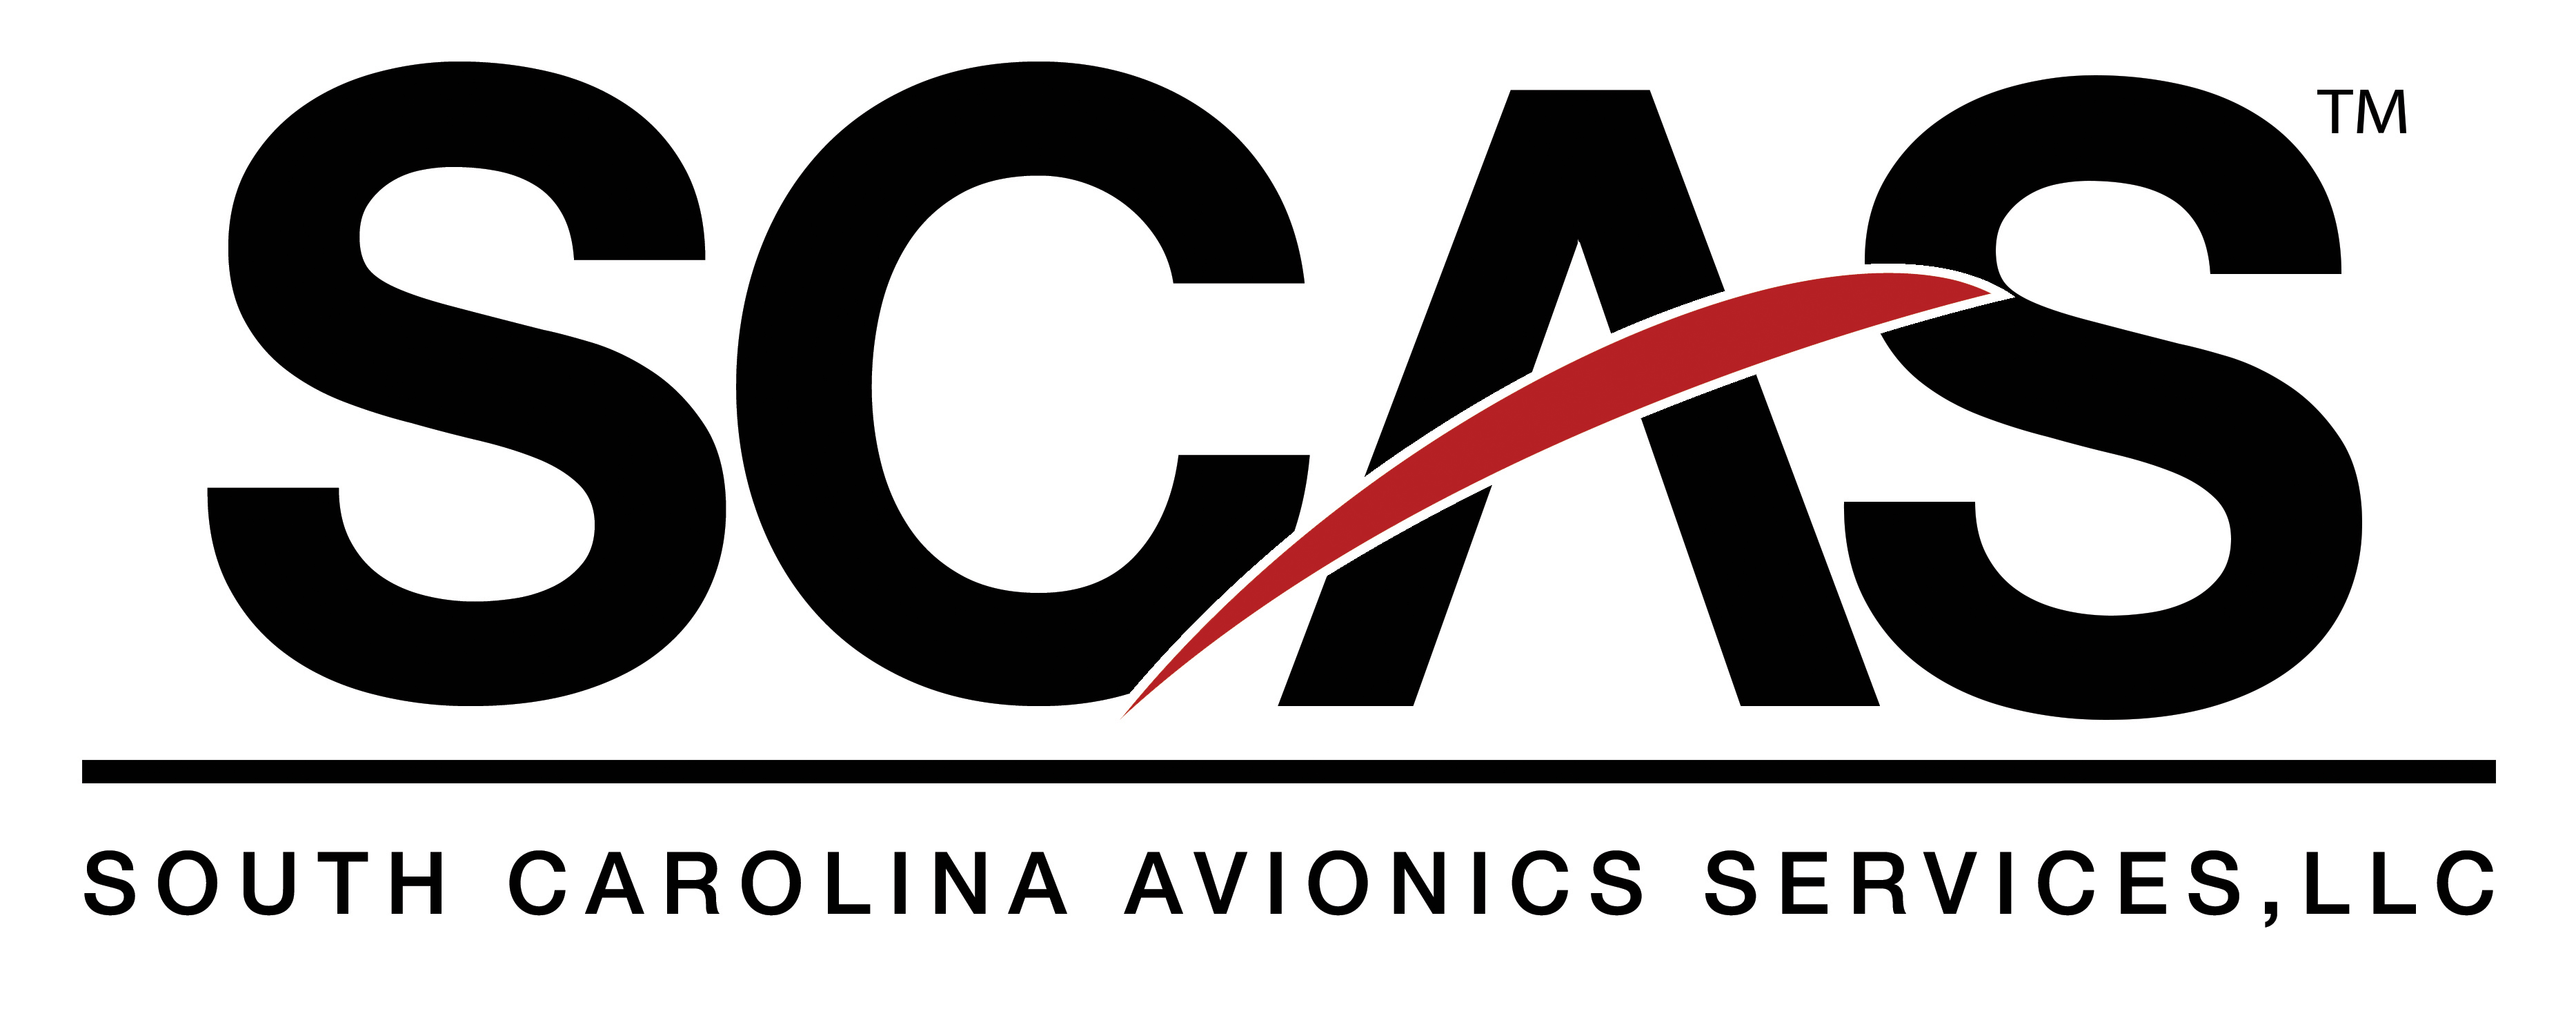 South Carolina Avionics Services LLC logo